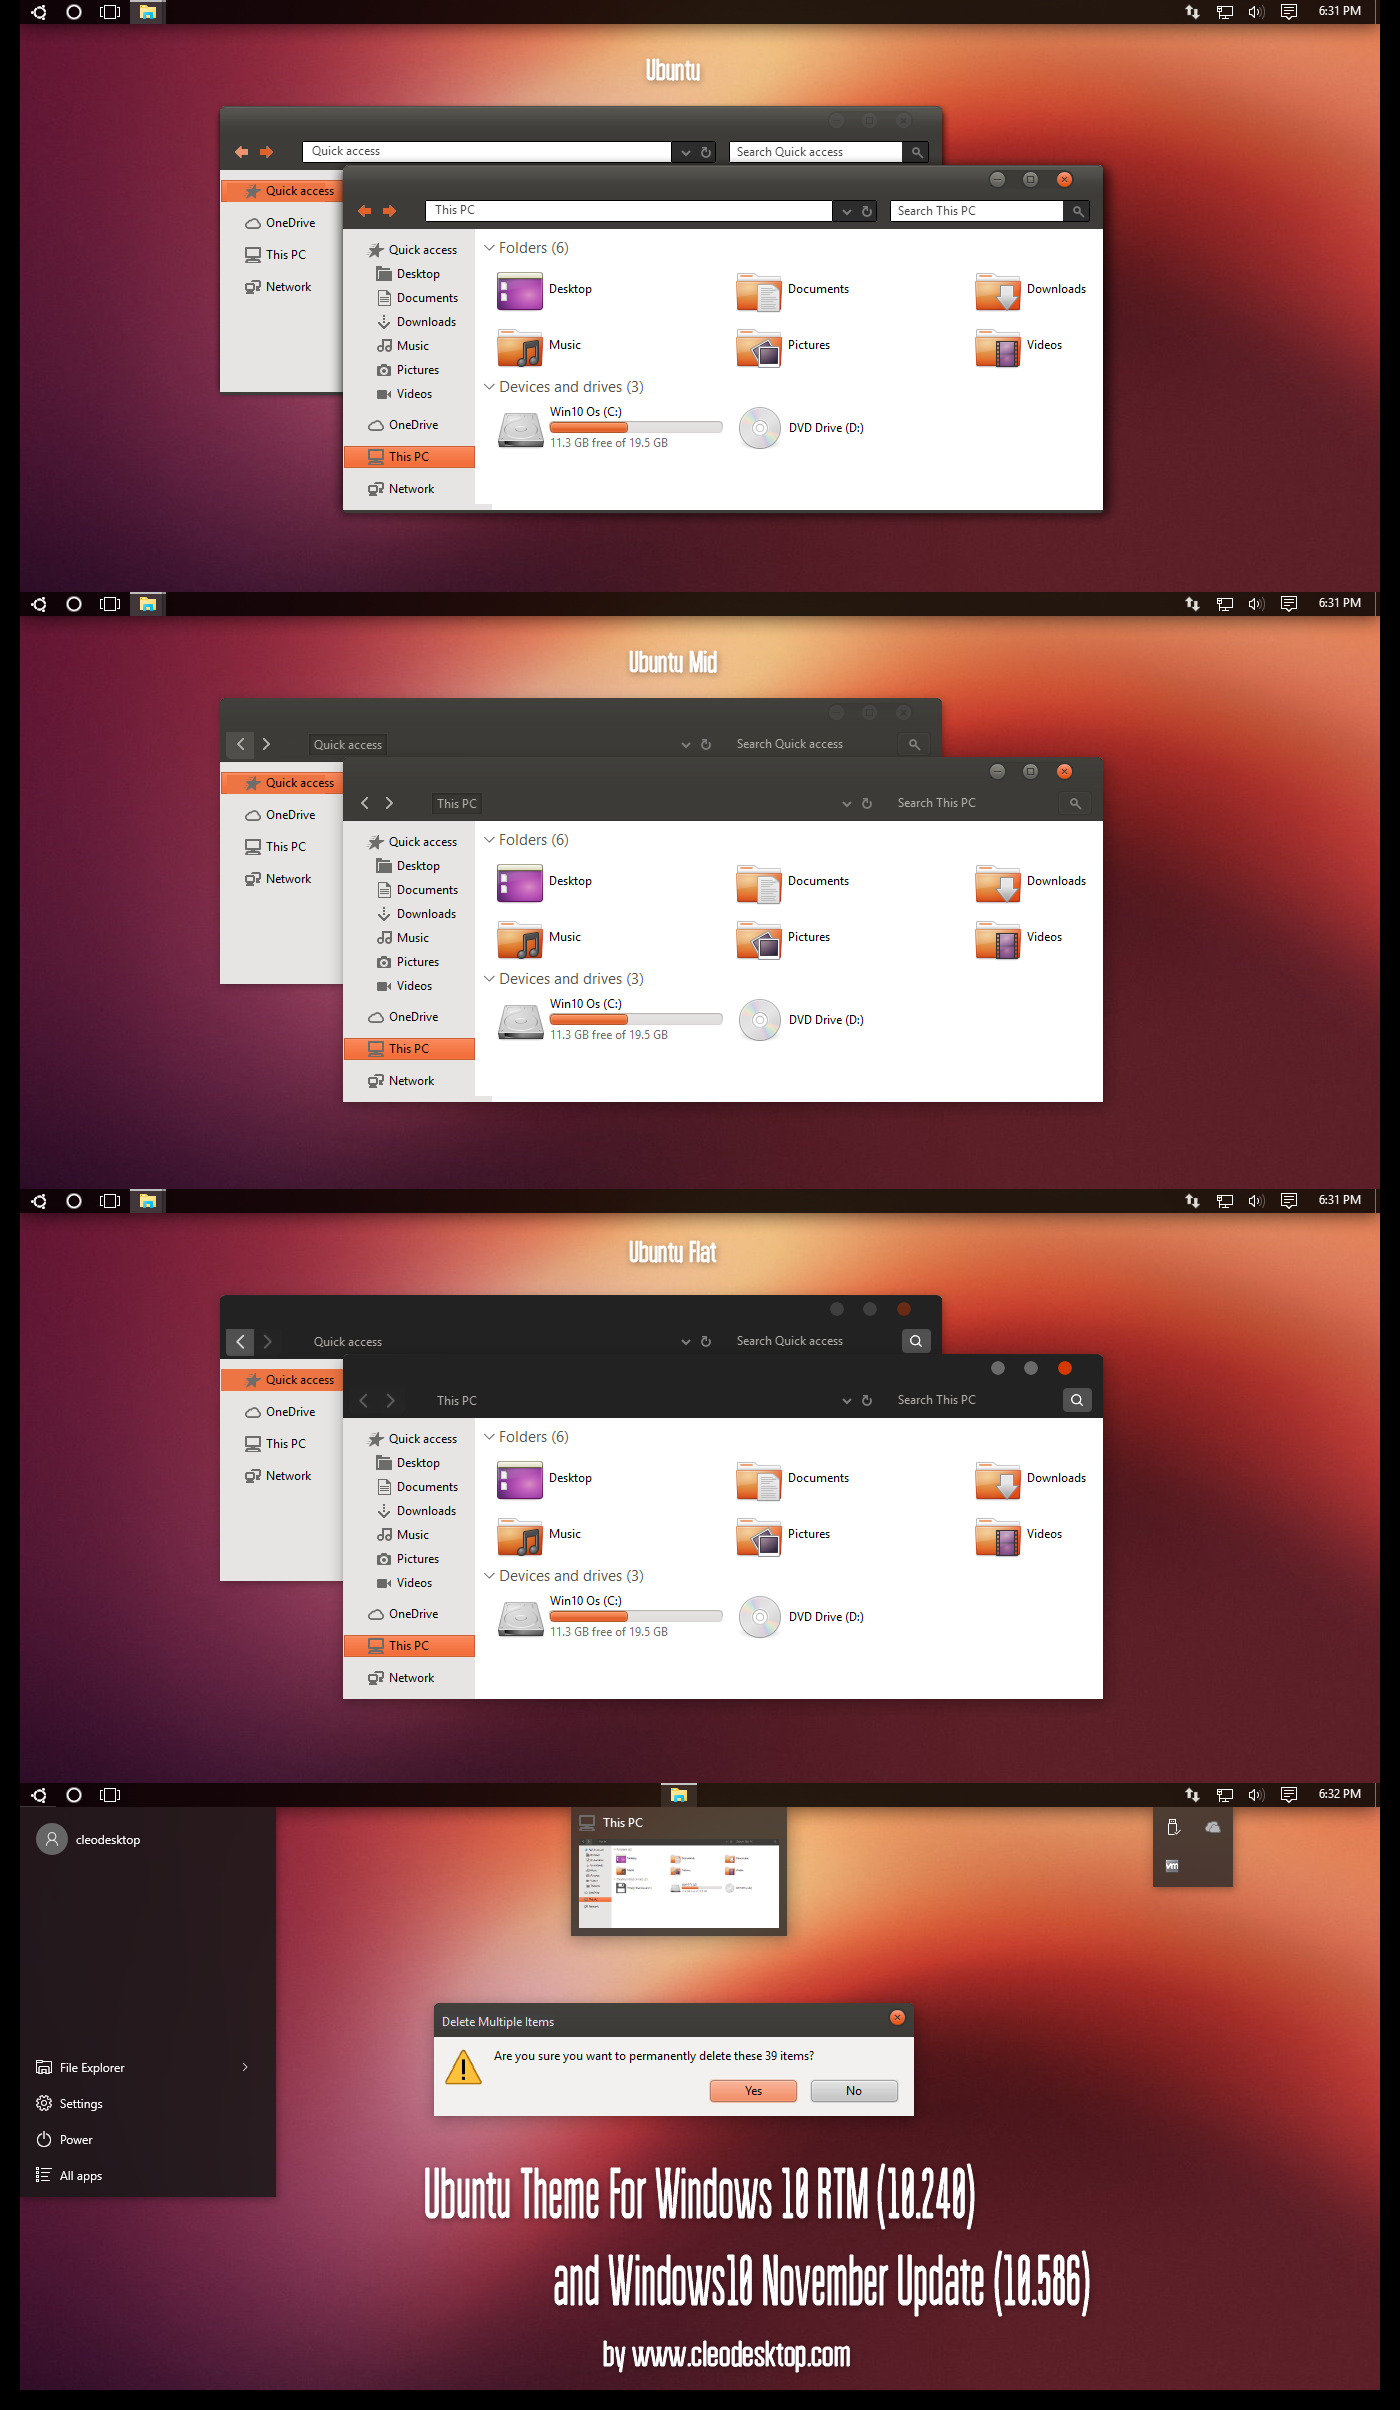 Ubuntu Theme Win10 Build 10586 Updated1